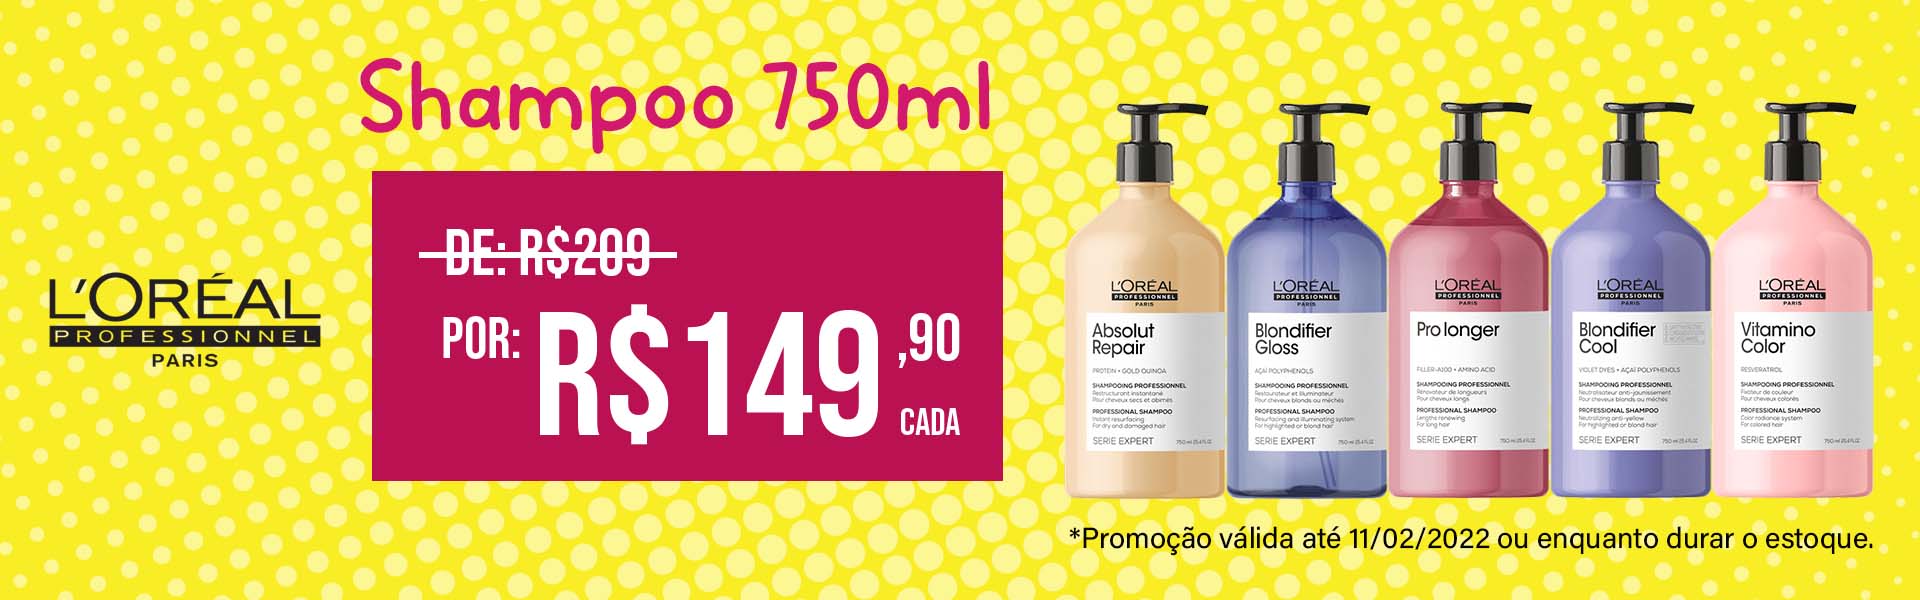 loreal shampoo 750